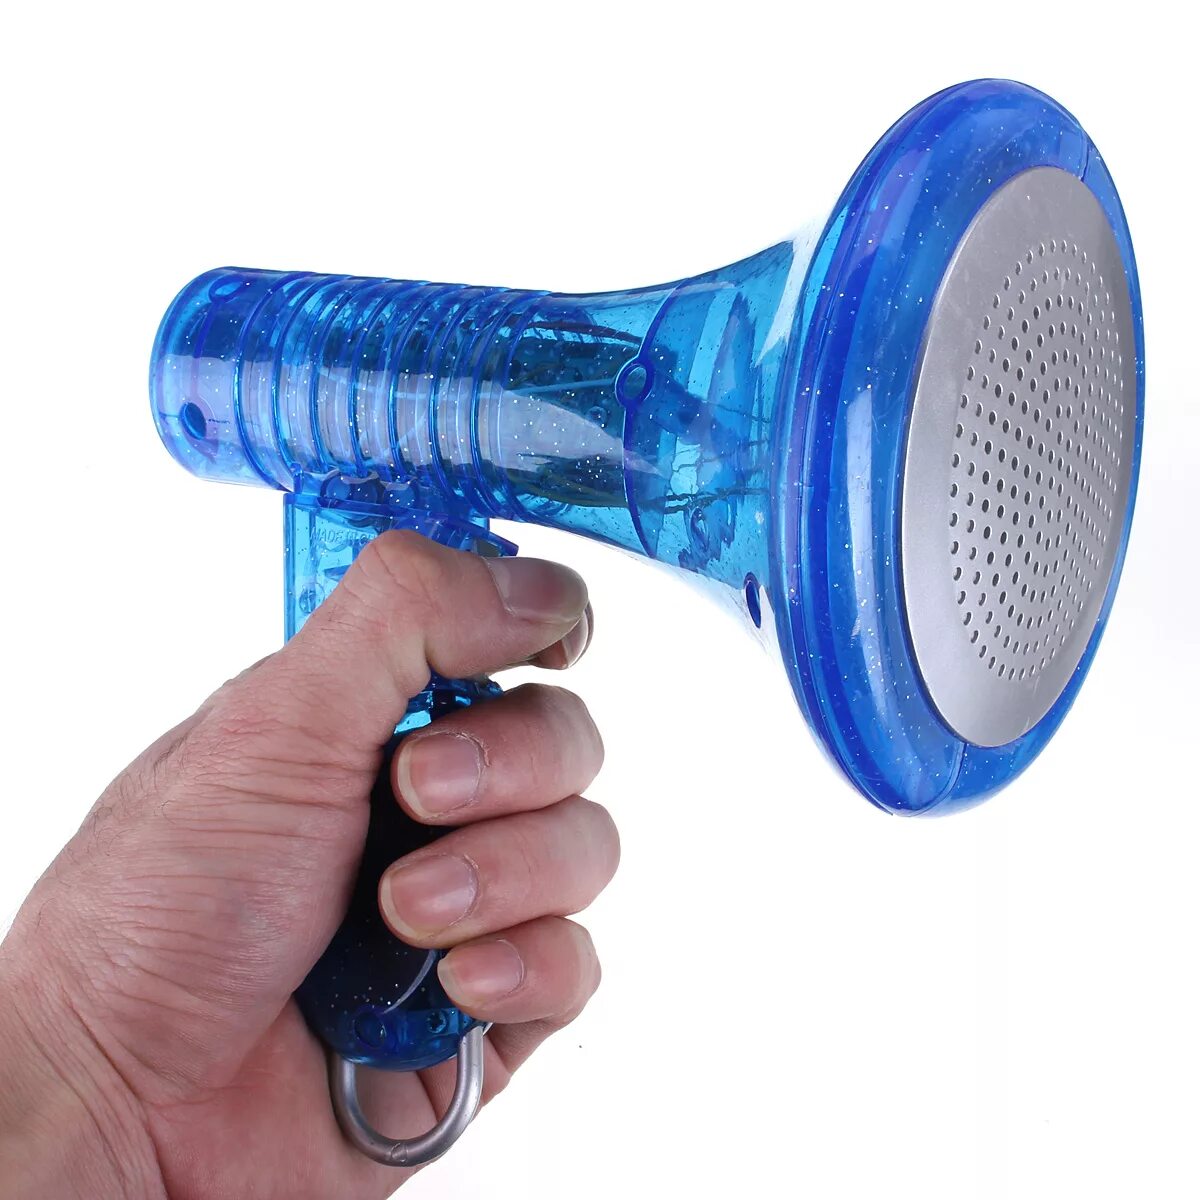 Voice changer mic. Рупор игрушка. Микрофон модулятор голоса. Синий микрофон игрушка. Изменитель голоса для микрофона.